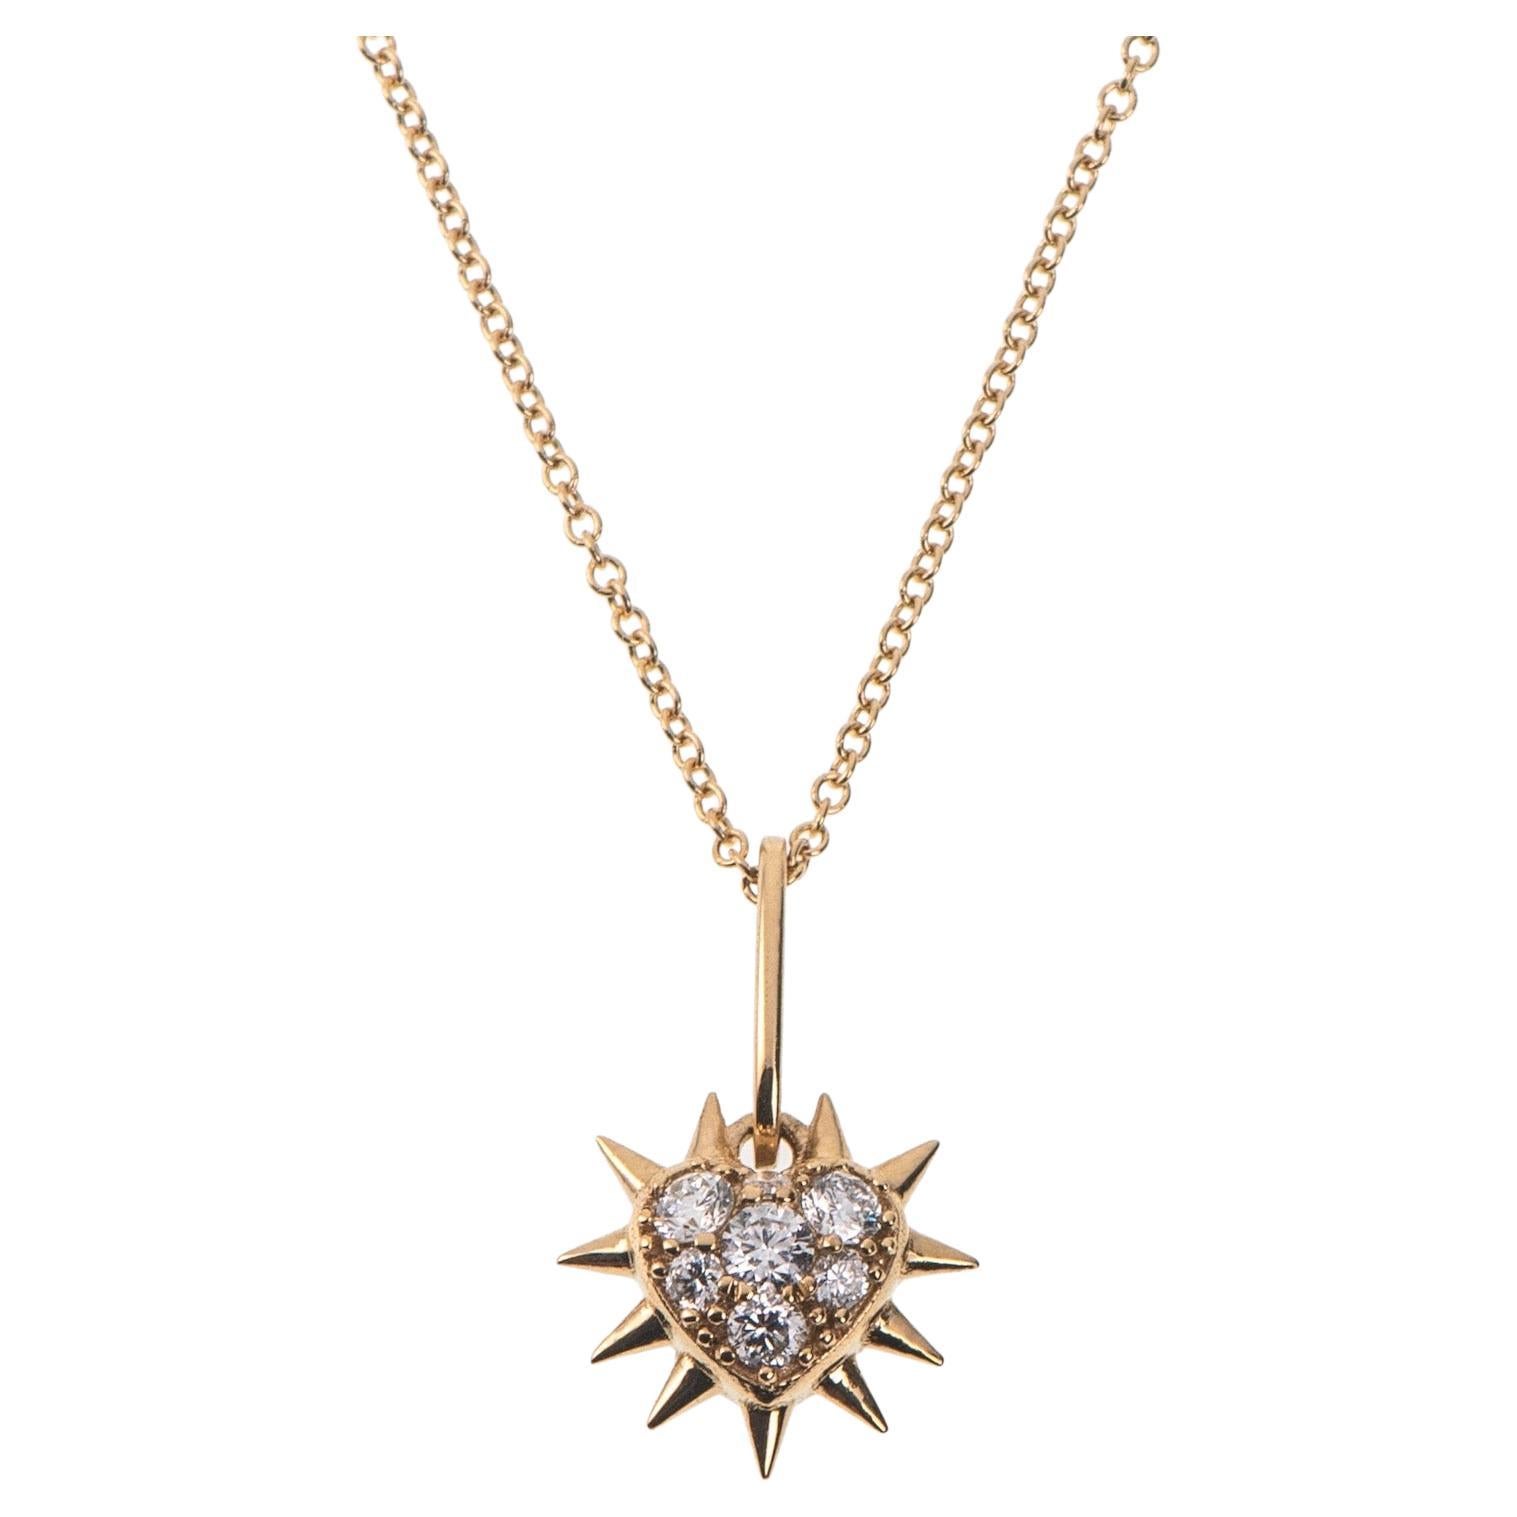 Maria Kotsoni Contemporary 18k Gold Thorny Heart White Diamond Pendant Necklace